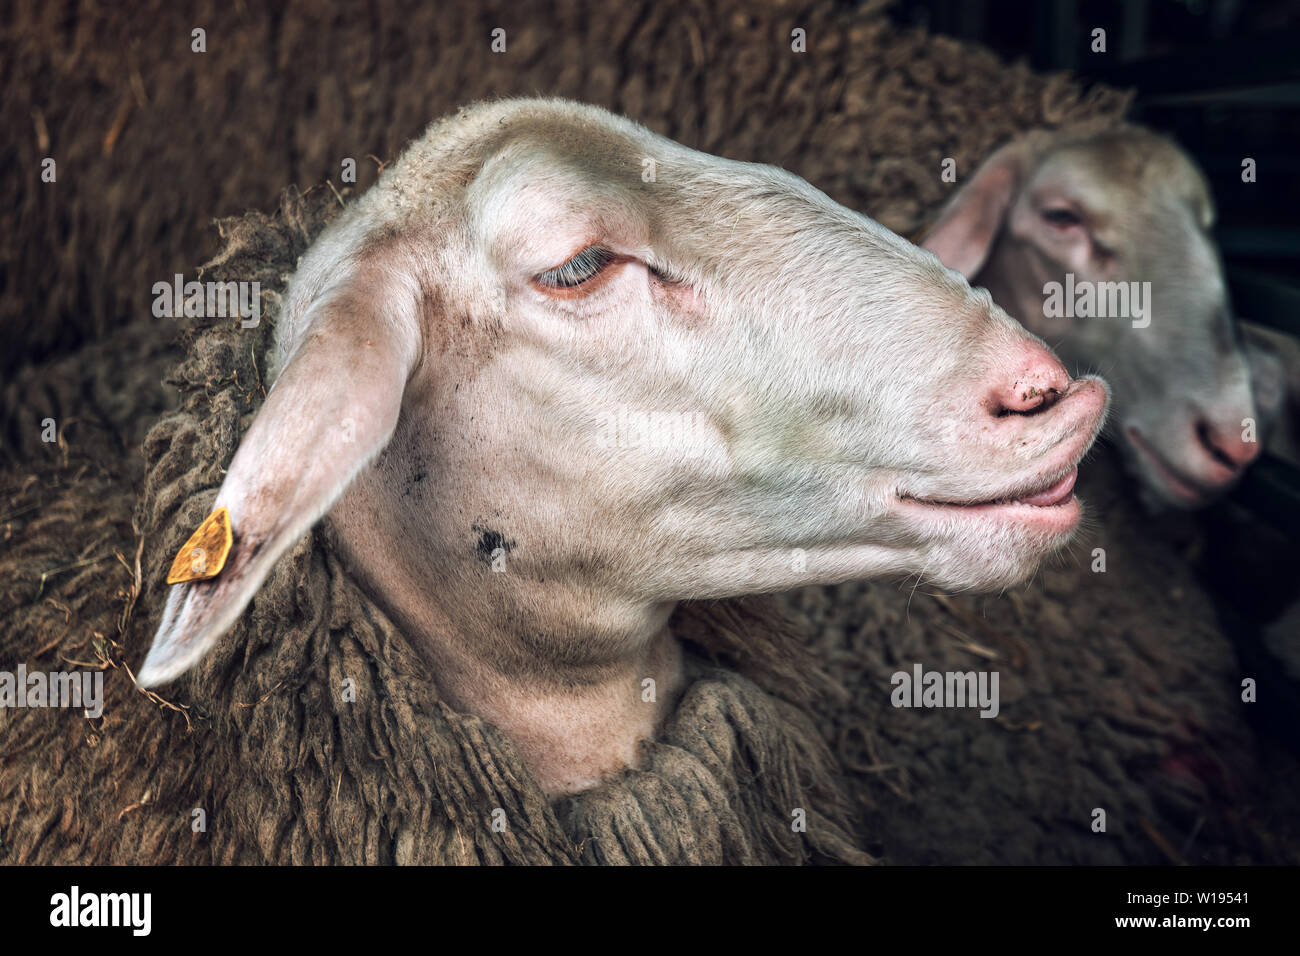 Sheep in pen on livestock farm, domestic animals husbandry Stock Photo